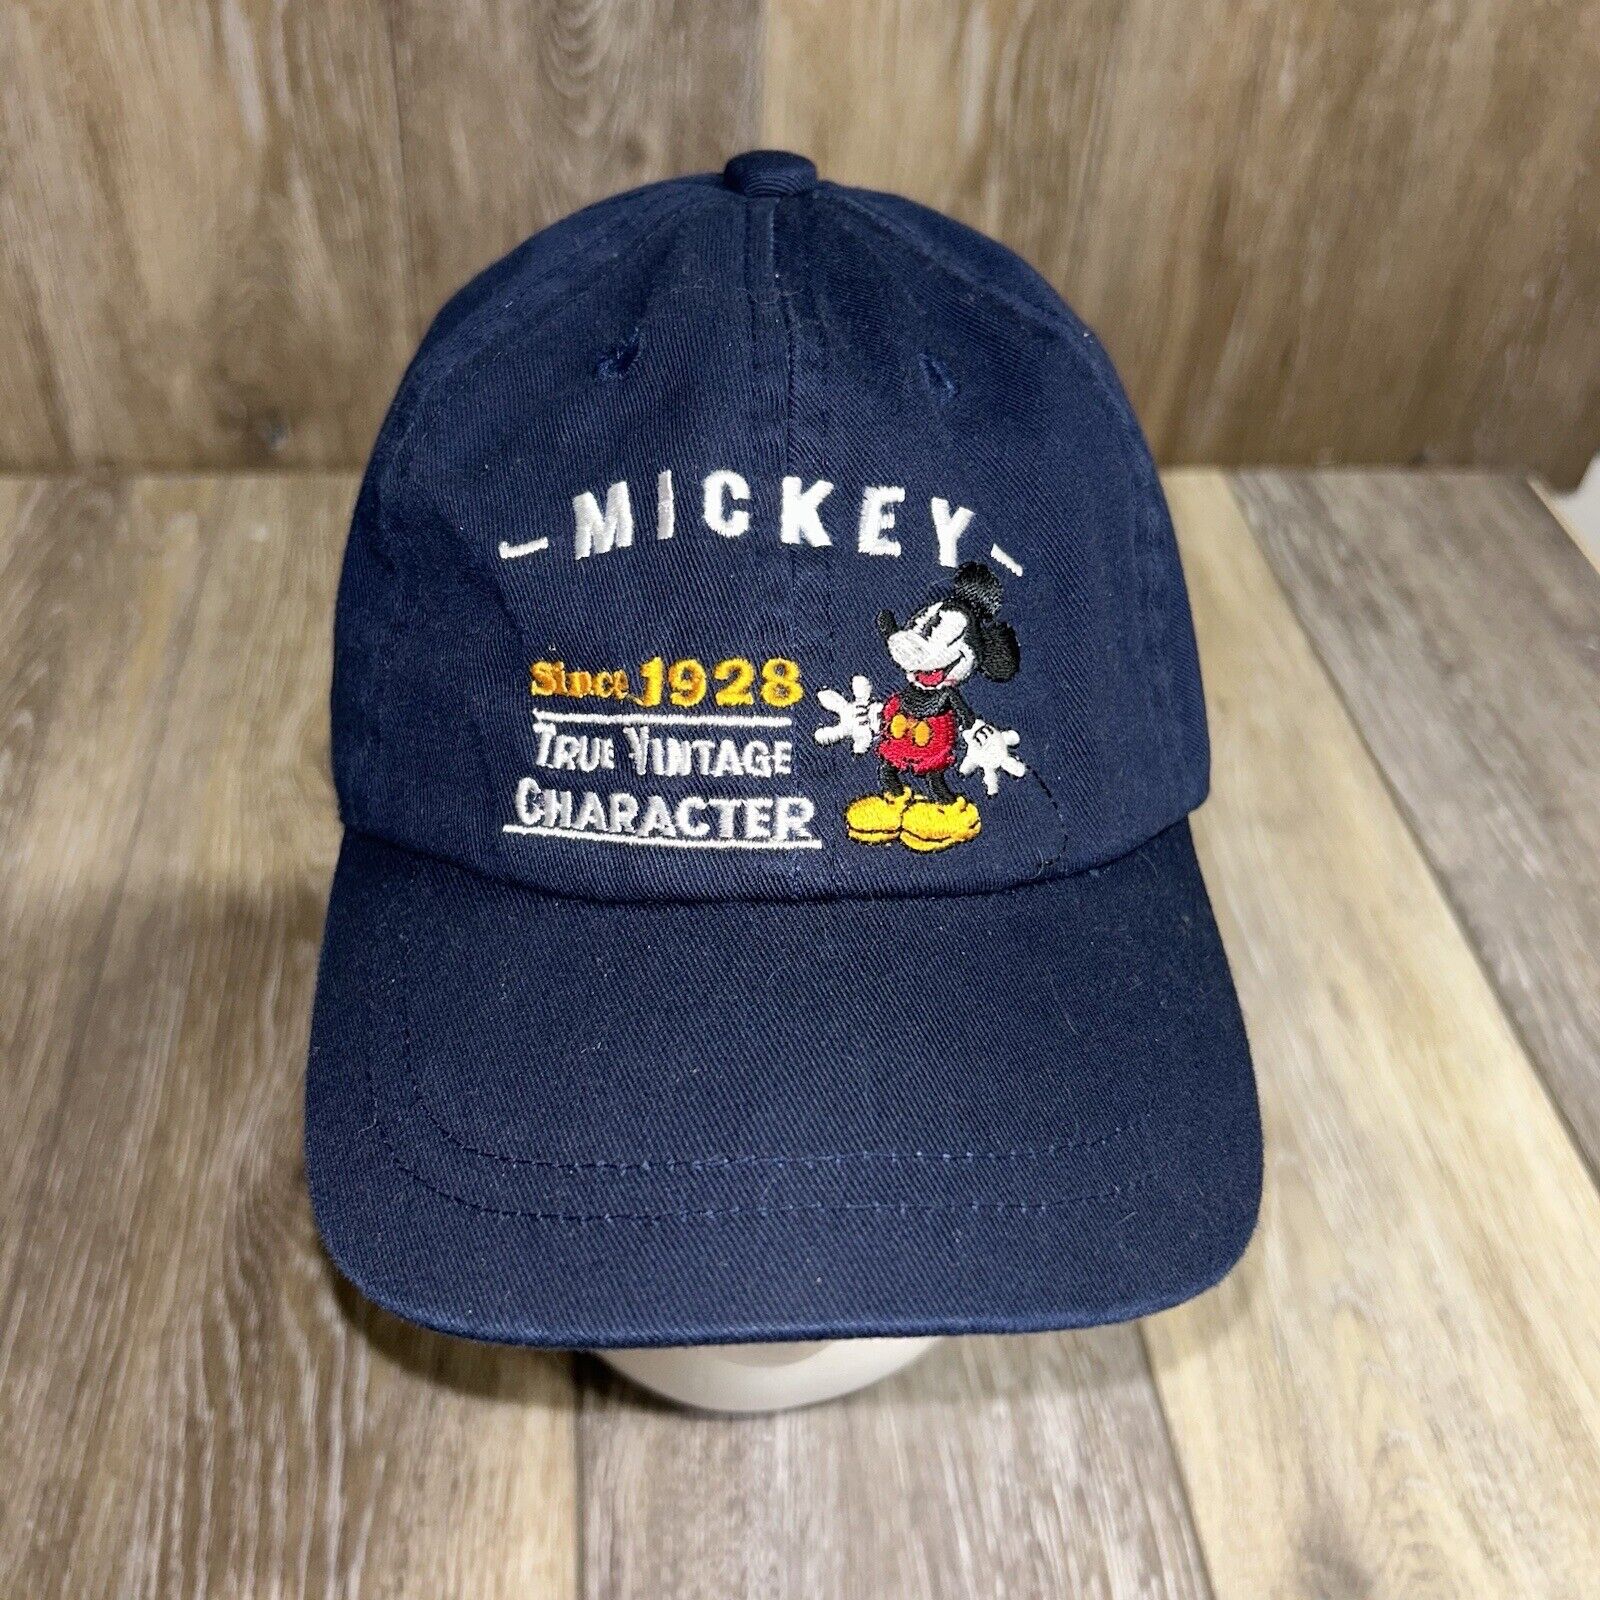 Walt Disney World Youth Vintage Character Mickey Mouse Strapback Blue Adjustable